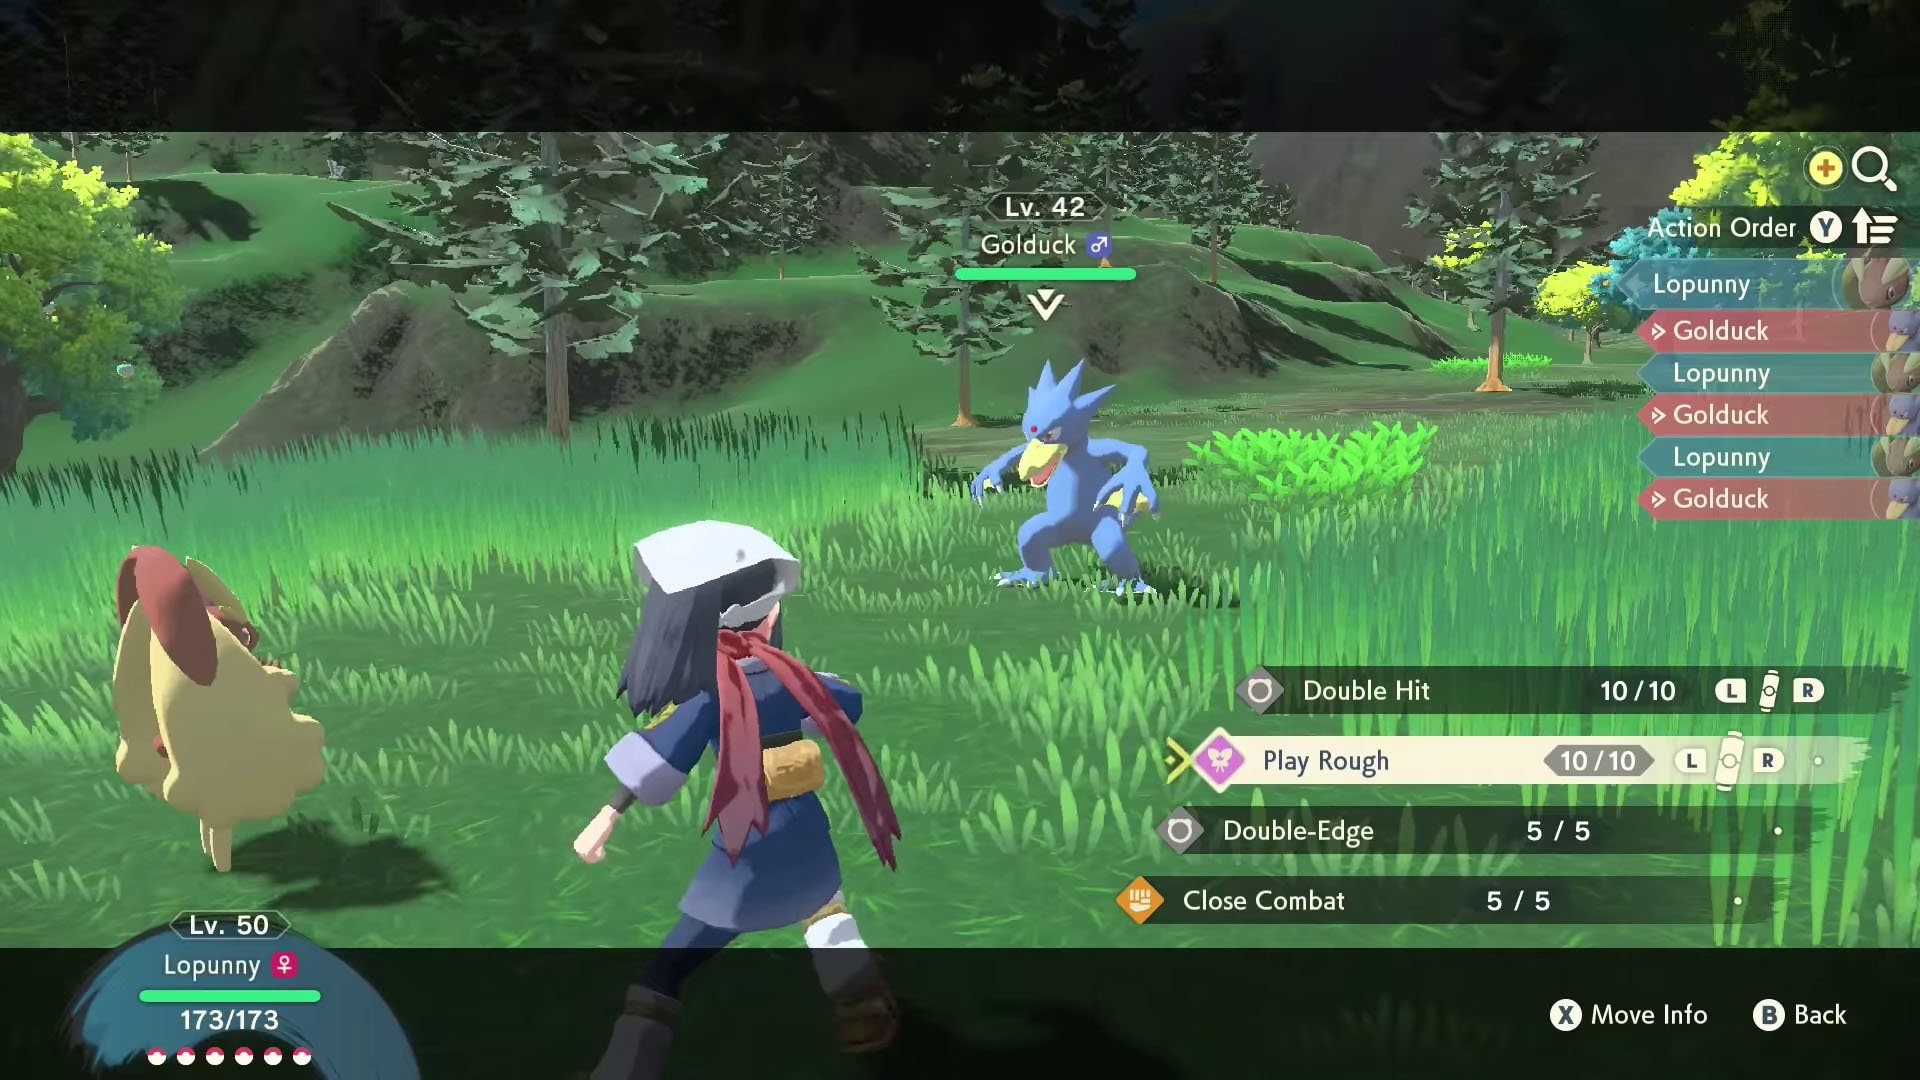 Nintendo releases Pokémon Legends: Arceus extended gameplay trailer